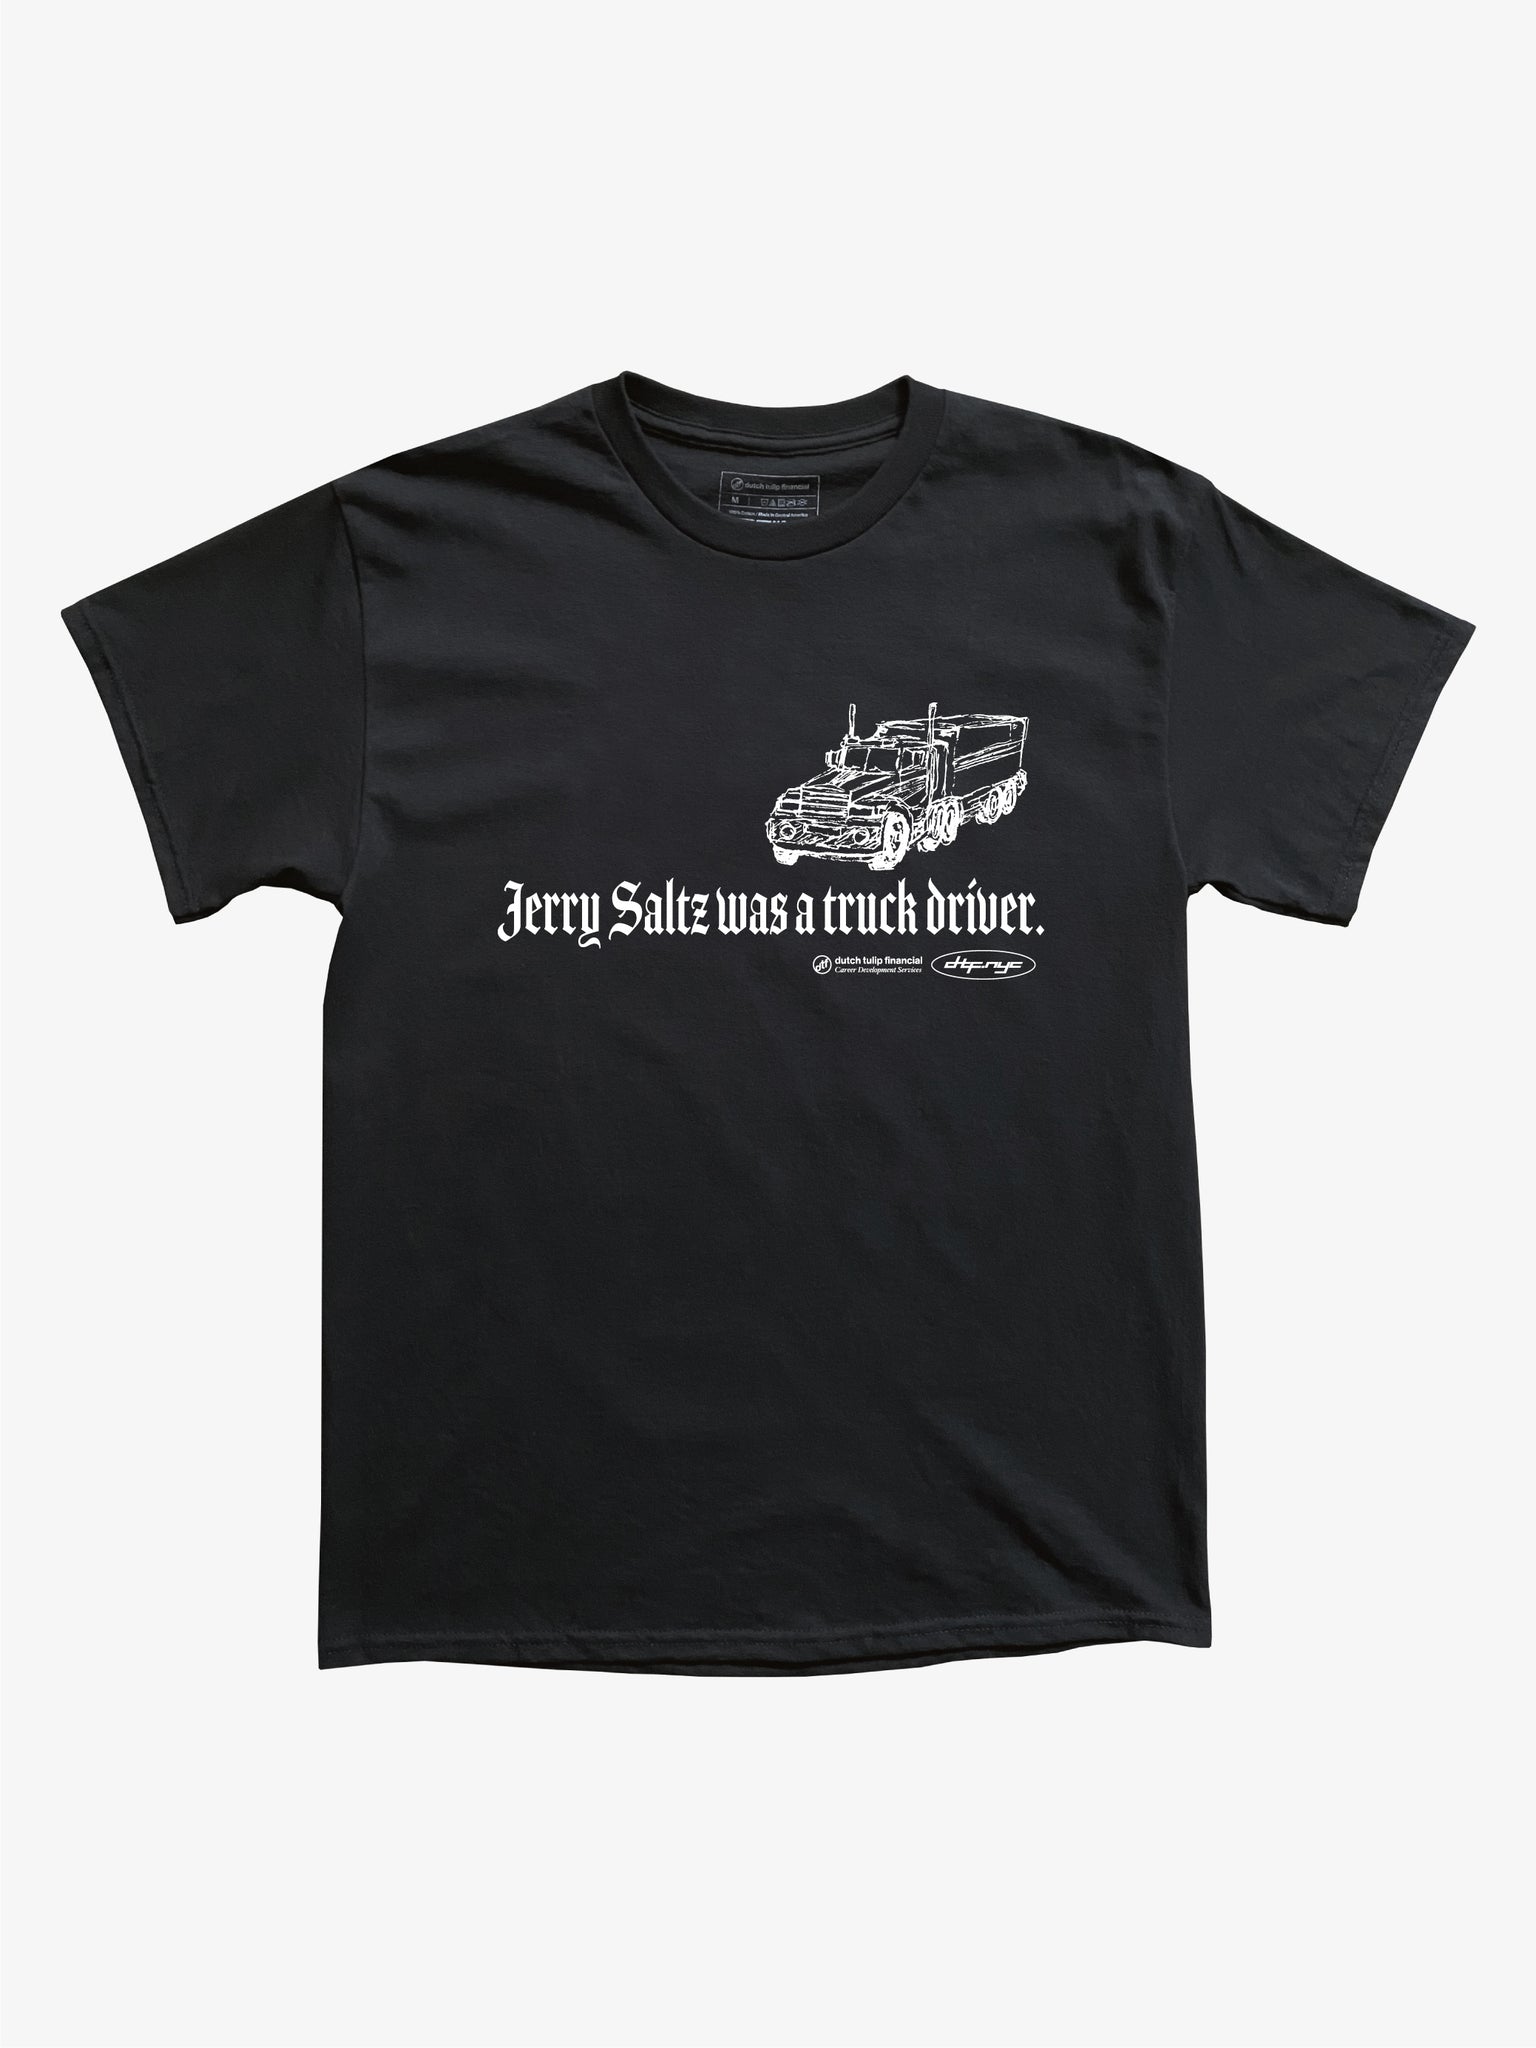 Jerry Saltz was a truck driver Tee - Black